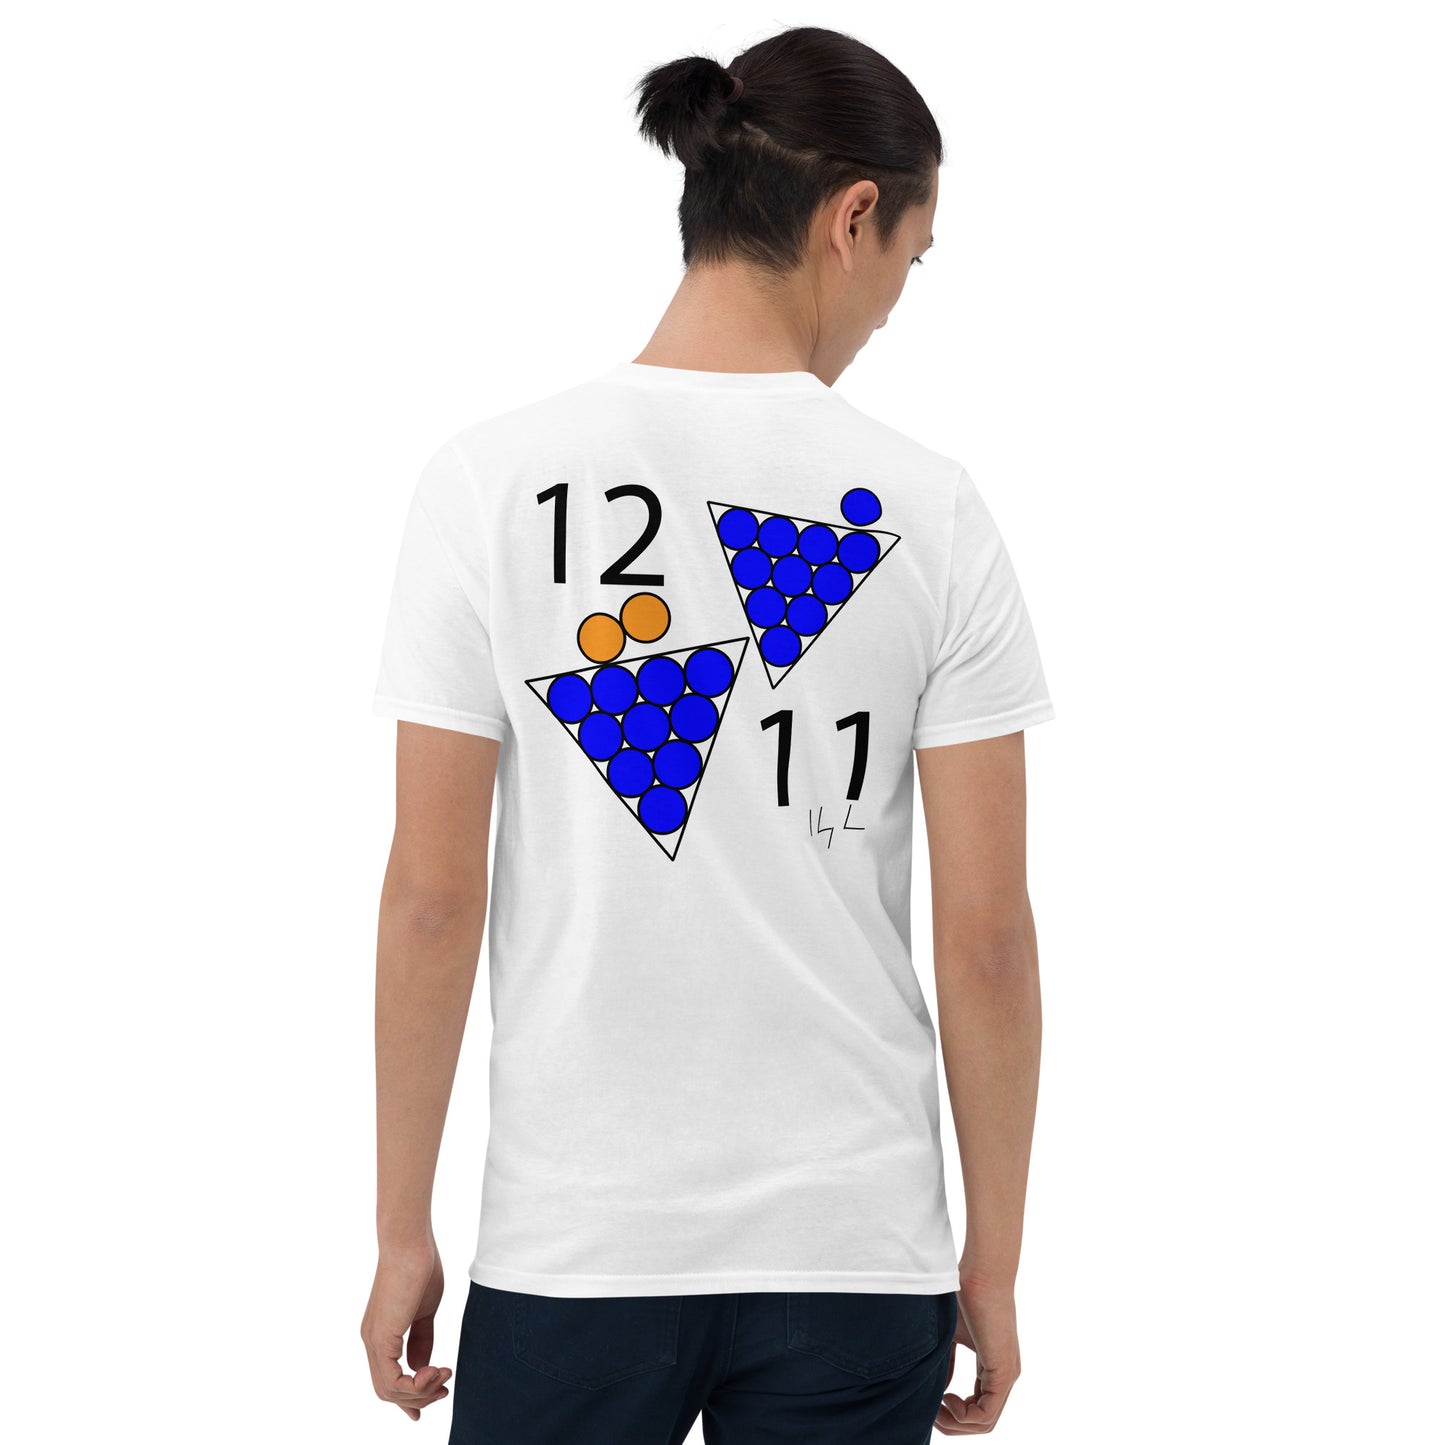 December 11th Blue T-Shirt at 12:11 1211